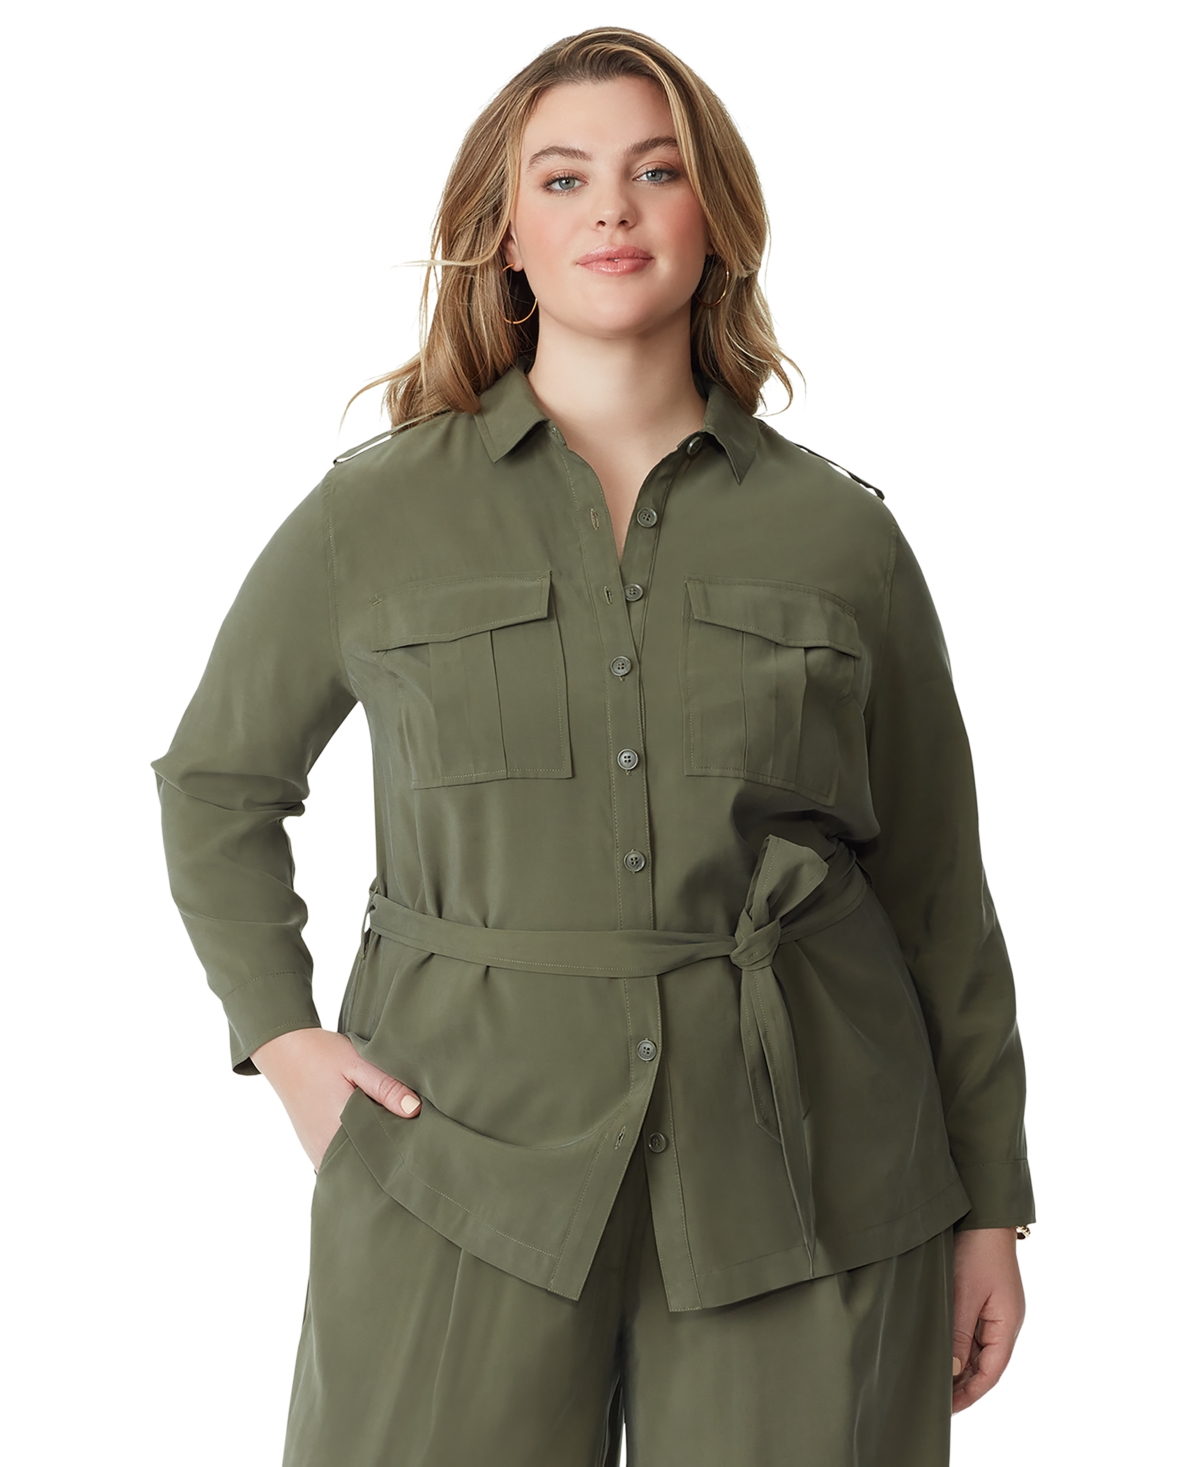 Trendy Plus Size Jessa Safari Jacket - Olive Night